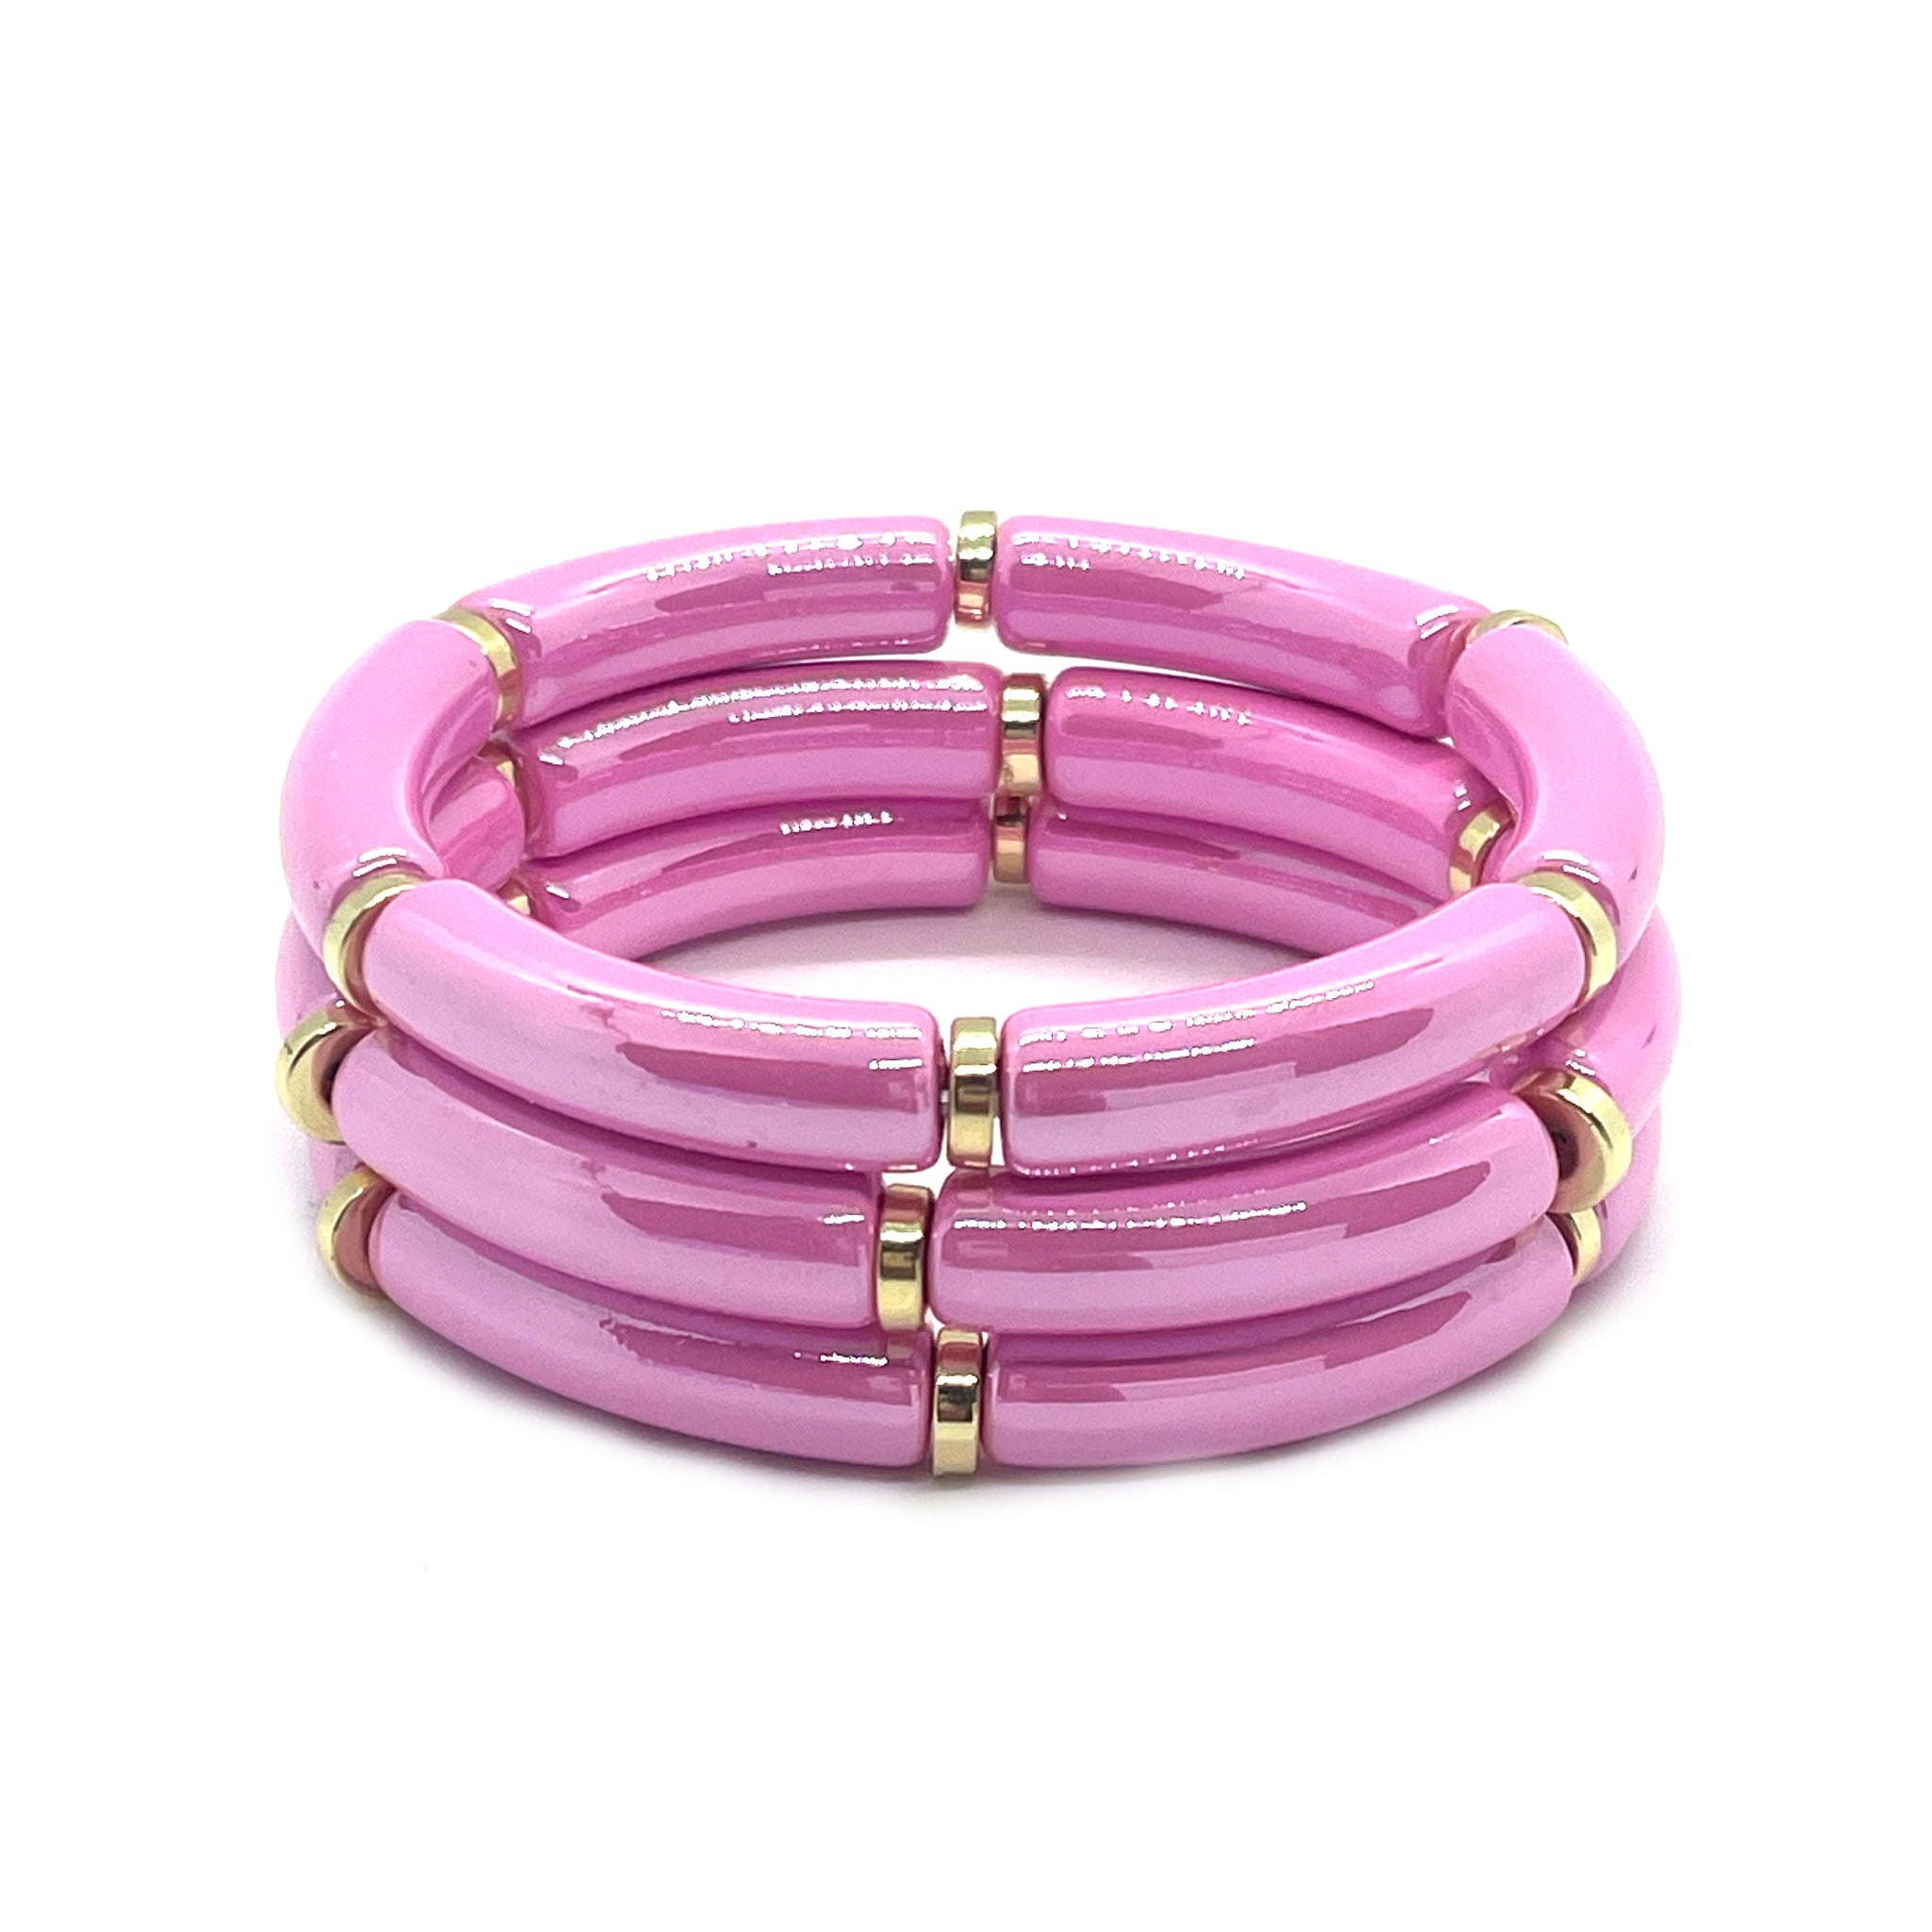 Pink Pearlized Tube Bracelet Set